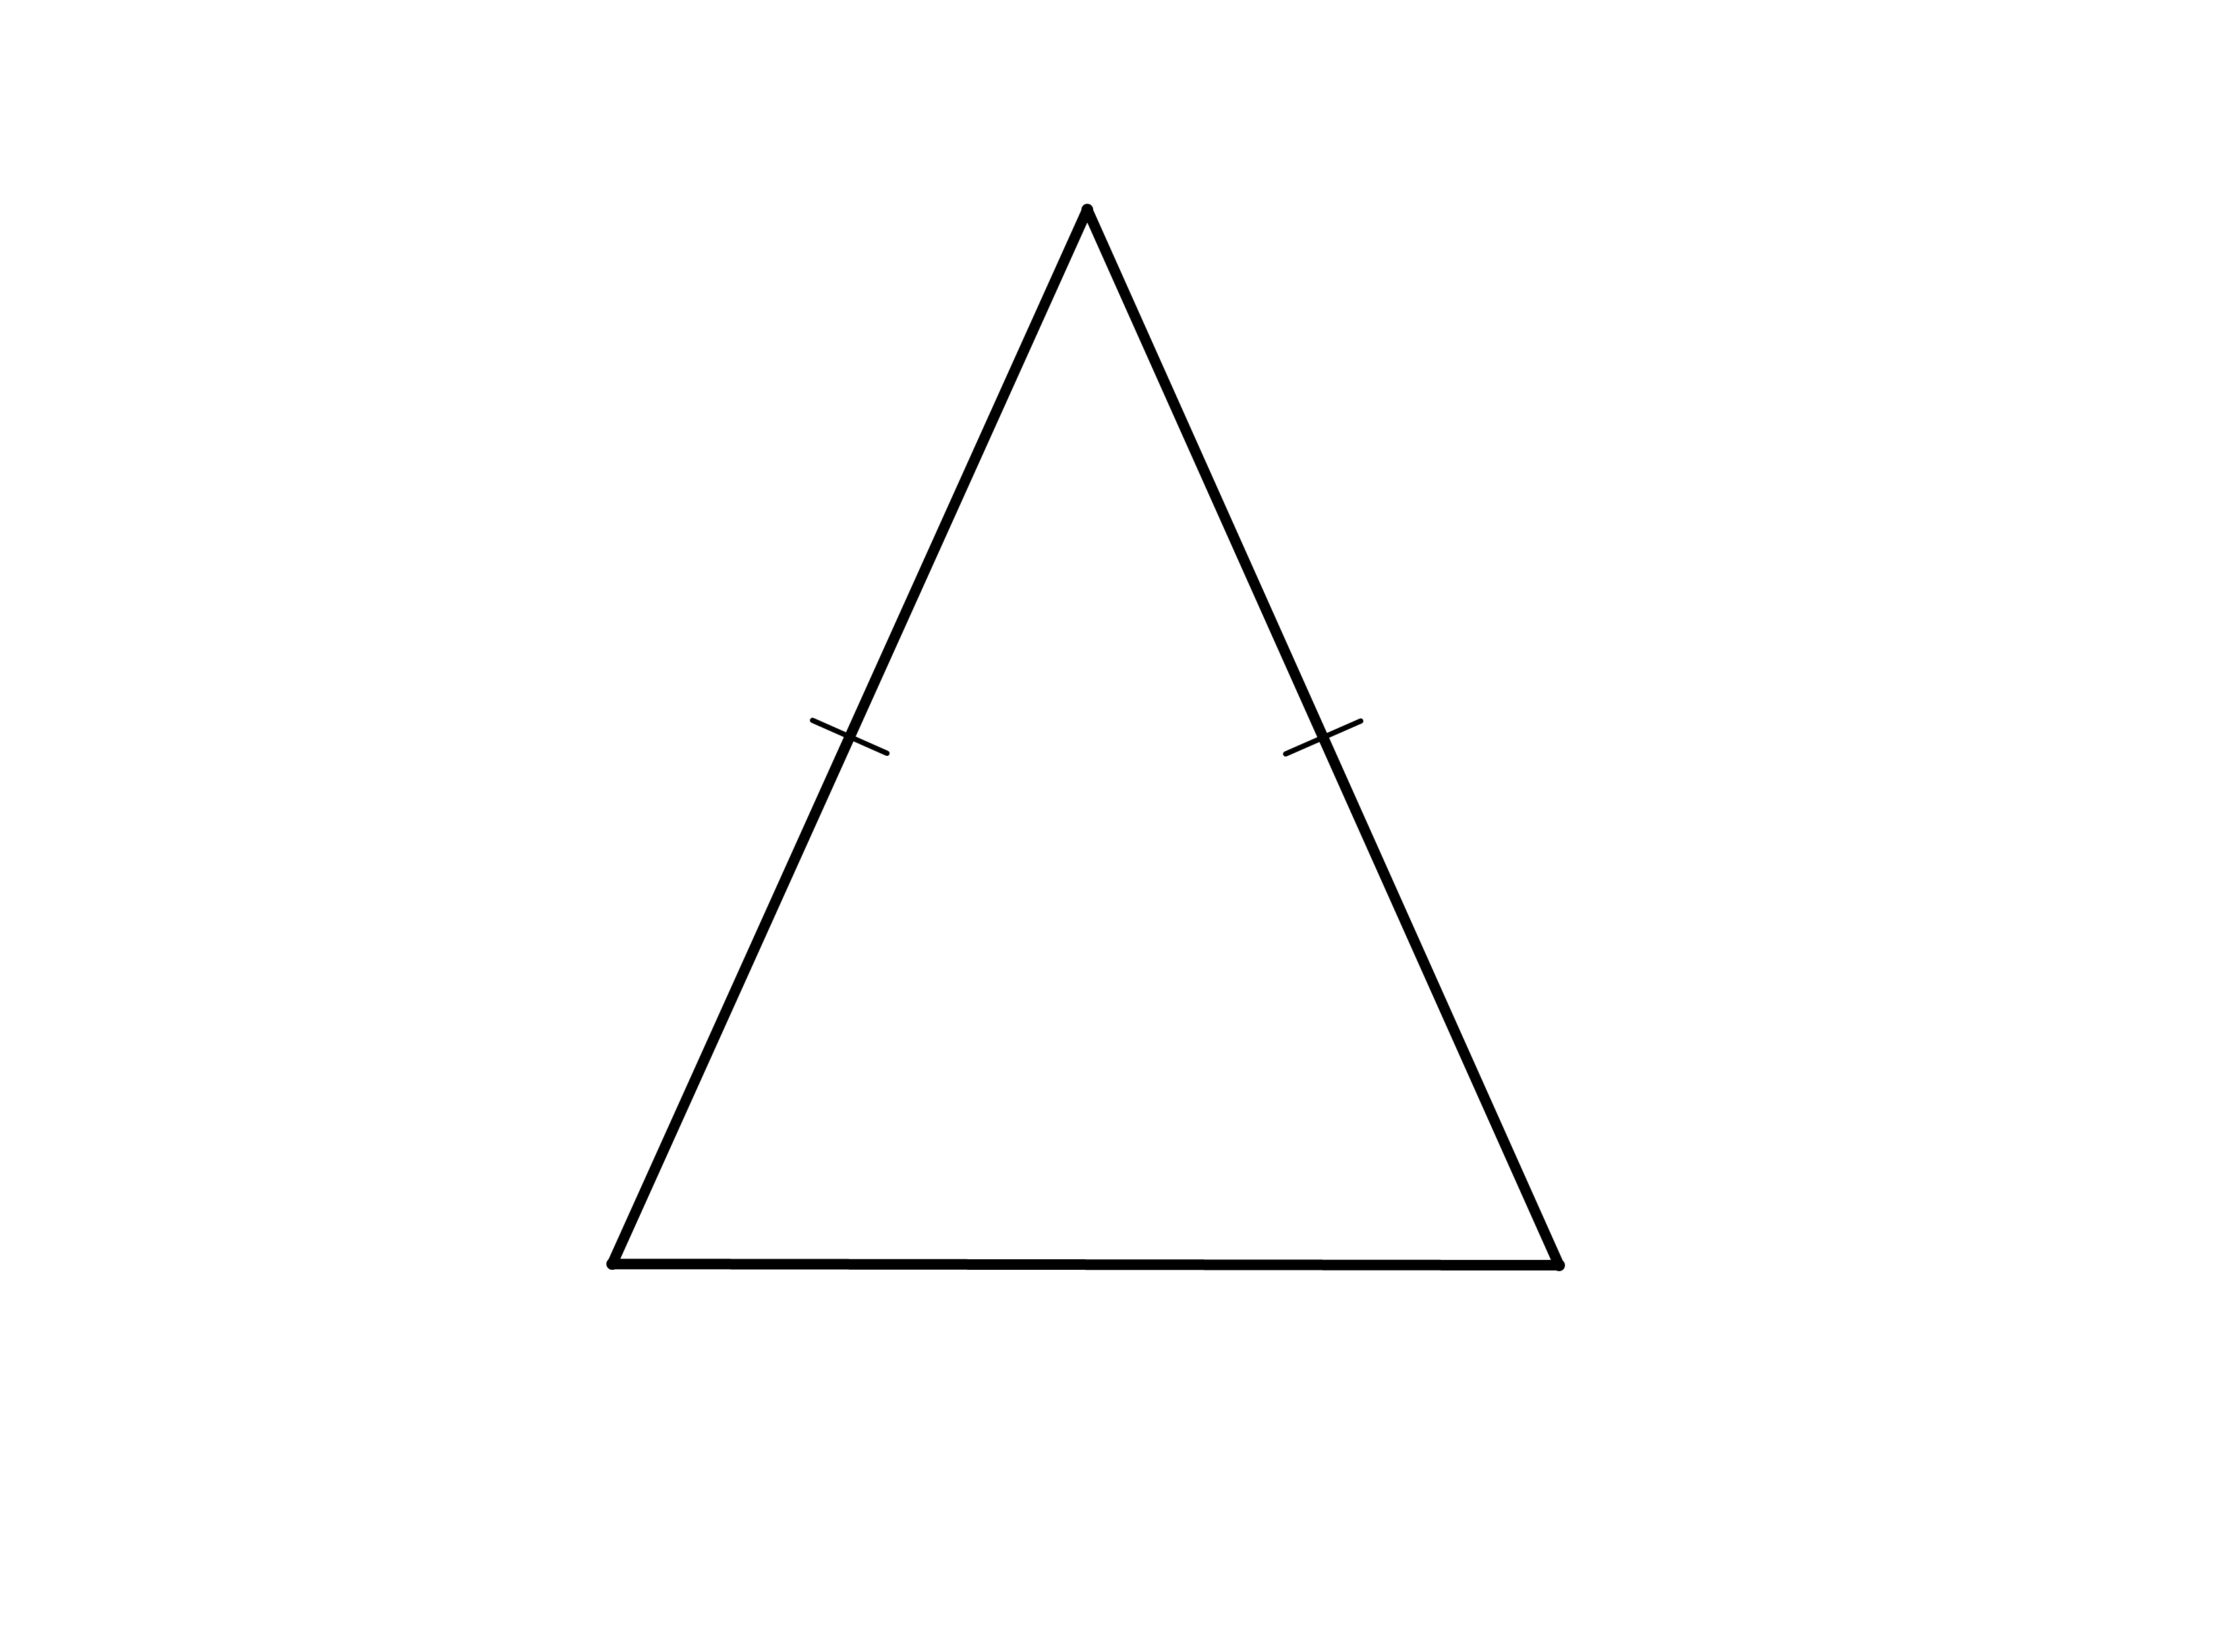 definition of an isosceles triangle